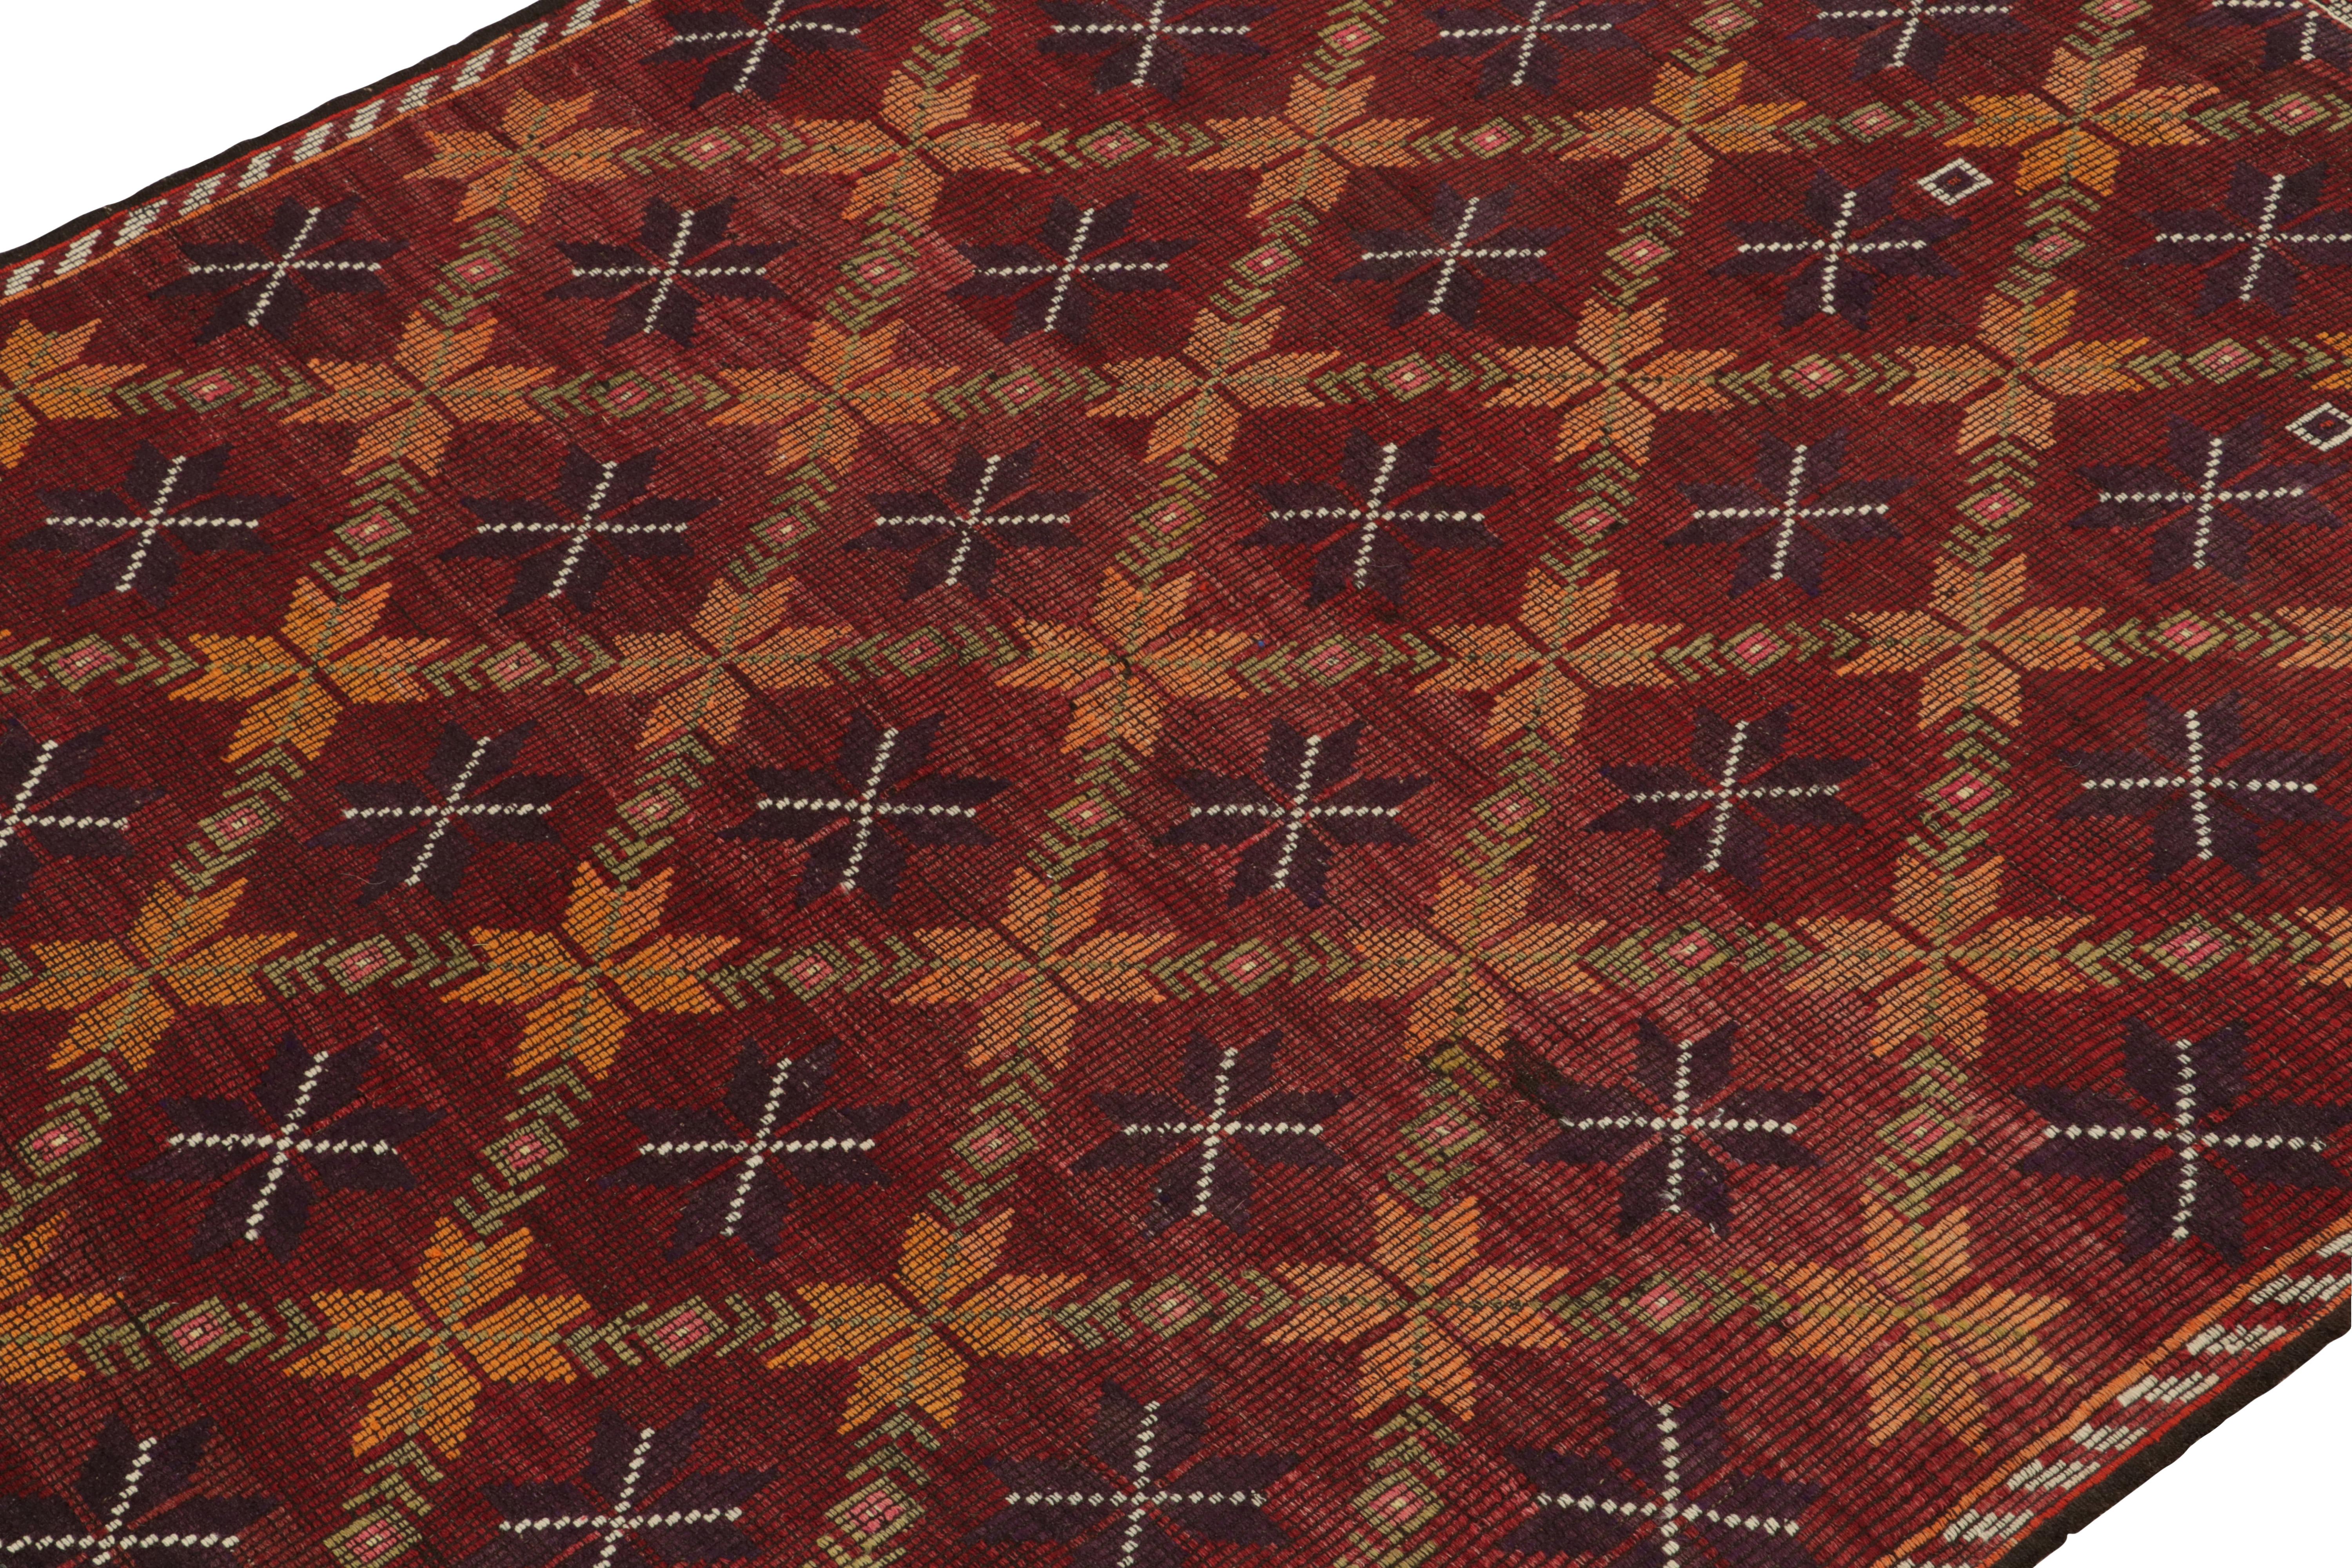 Hand-Knotted Vintage Cecim Kilim Rug in Red Orange Tribal Geometric Pattern by Rug & Kilim For Sale